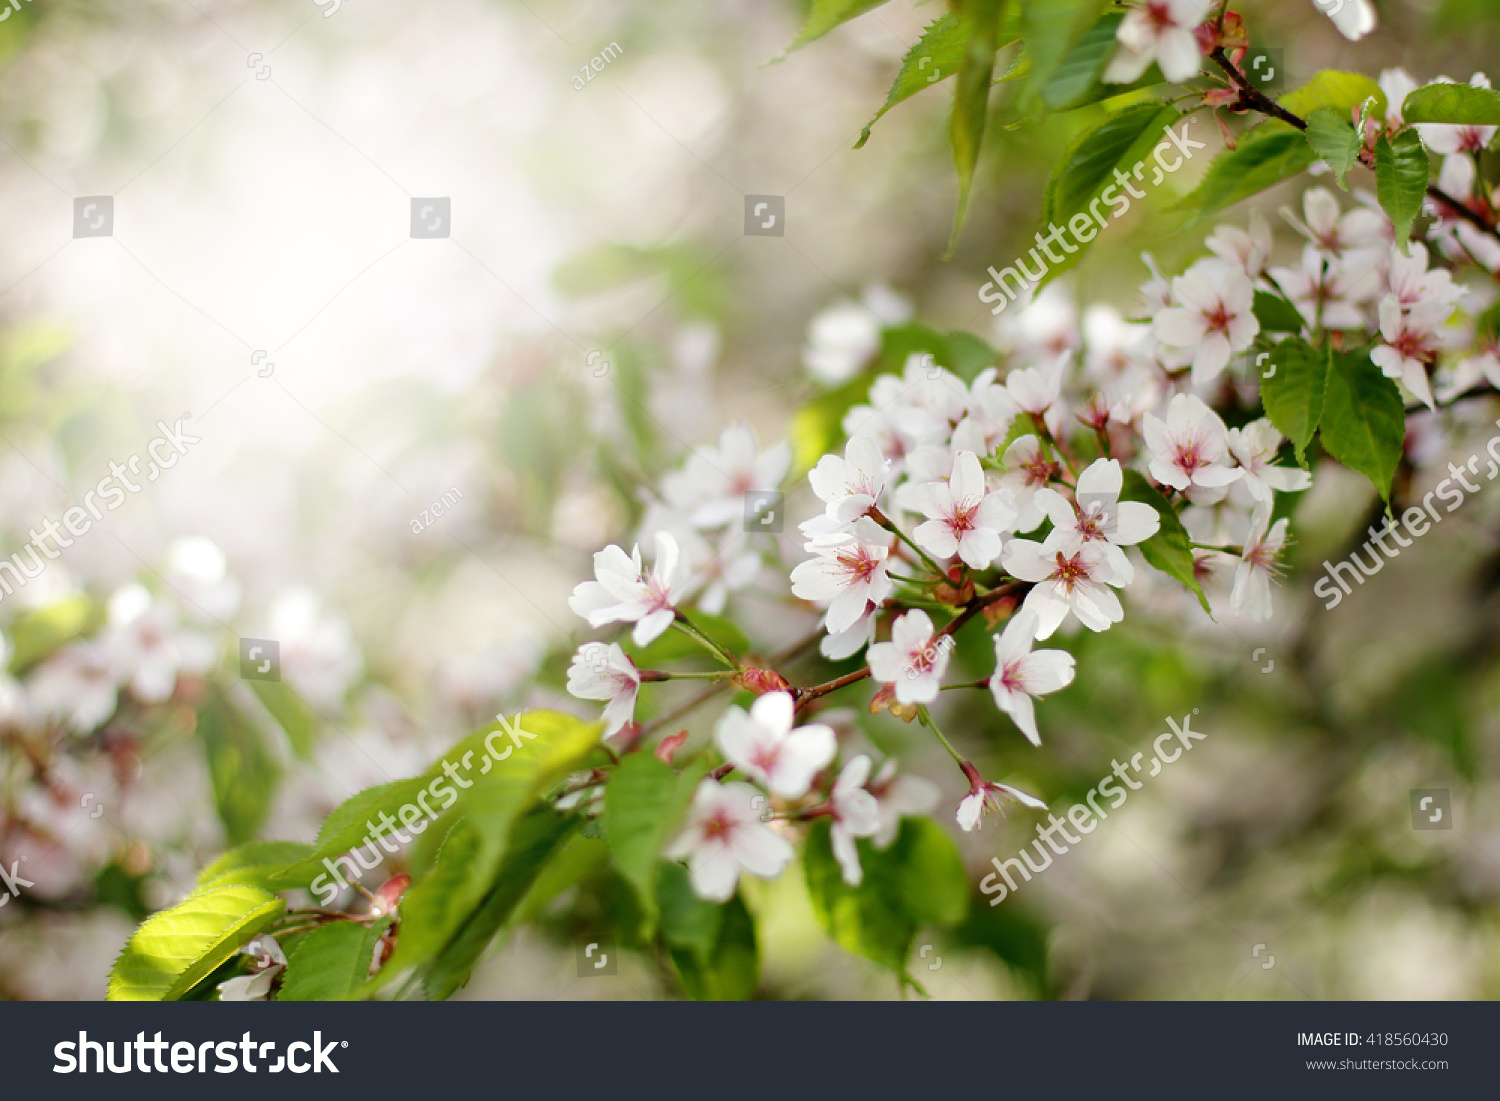 delicate flowers in the spring cherry blossom in the park/Japanese cherry Sakura #418560430